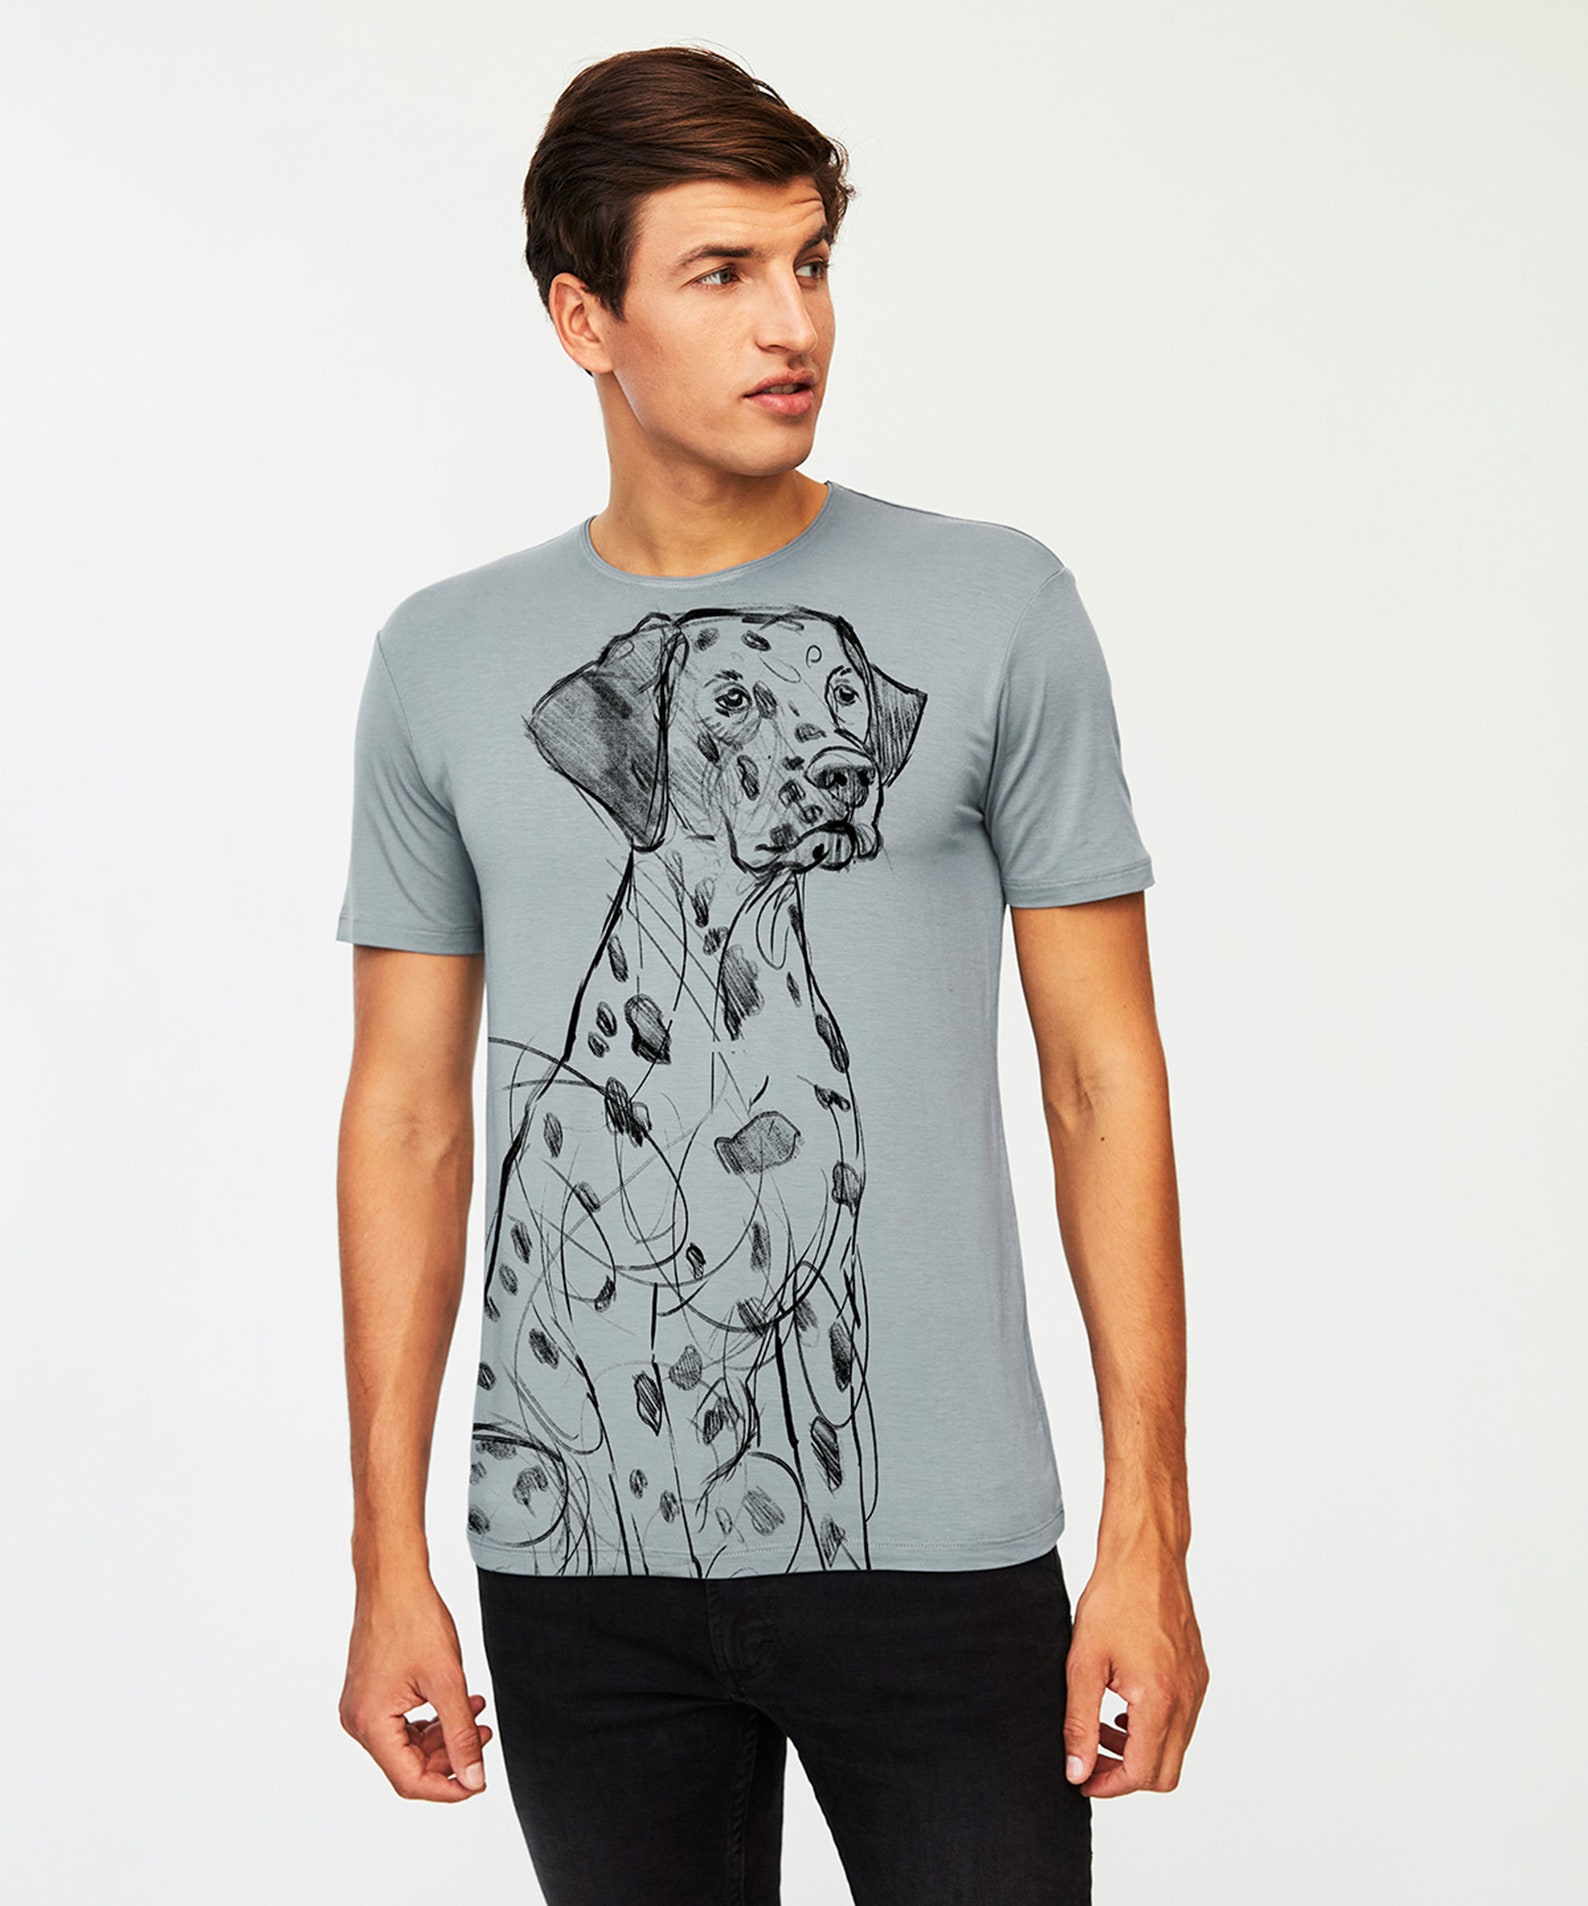 Dalmatian Dog T-shirt Man, Premium Quality Viscose, Shirt for Dog Lover ...